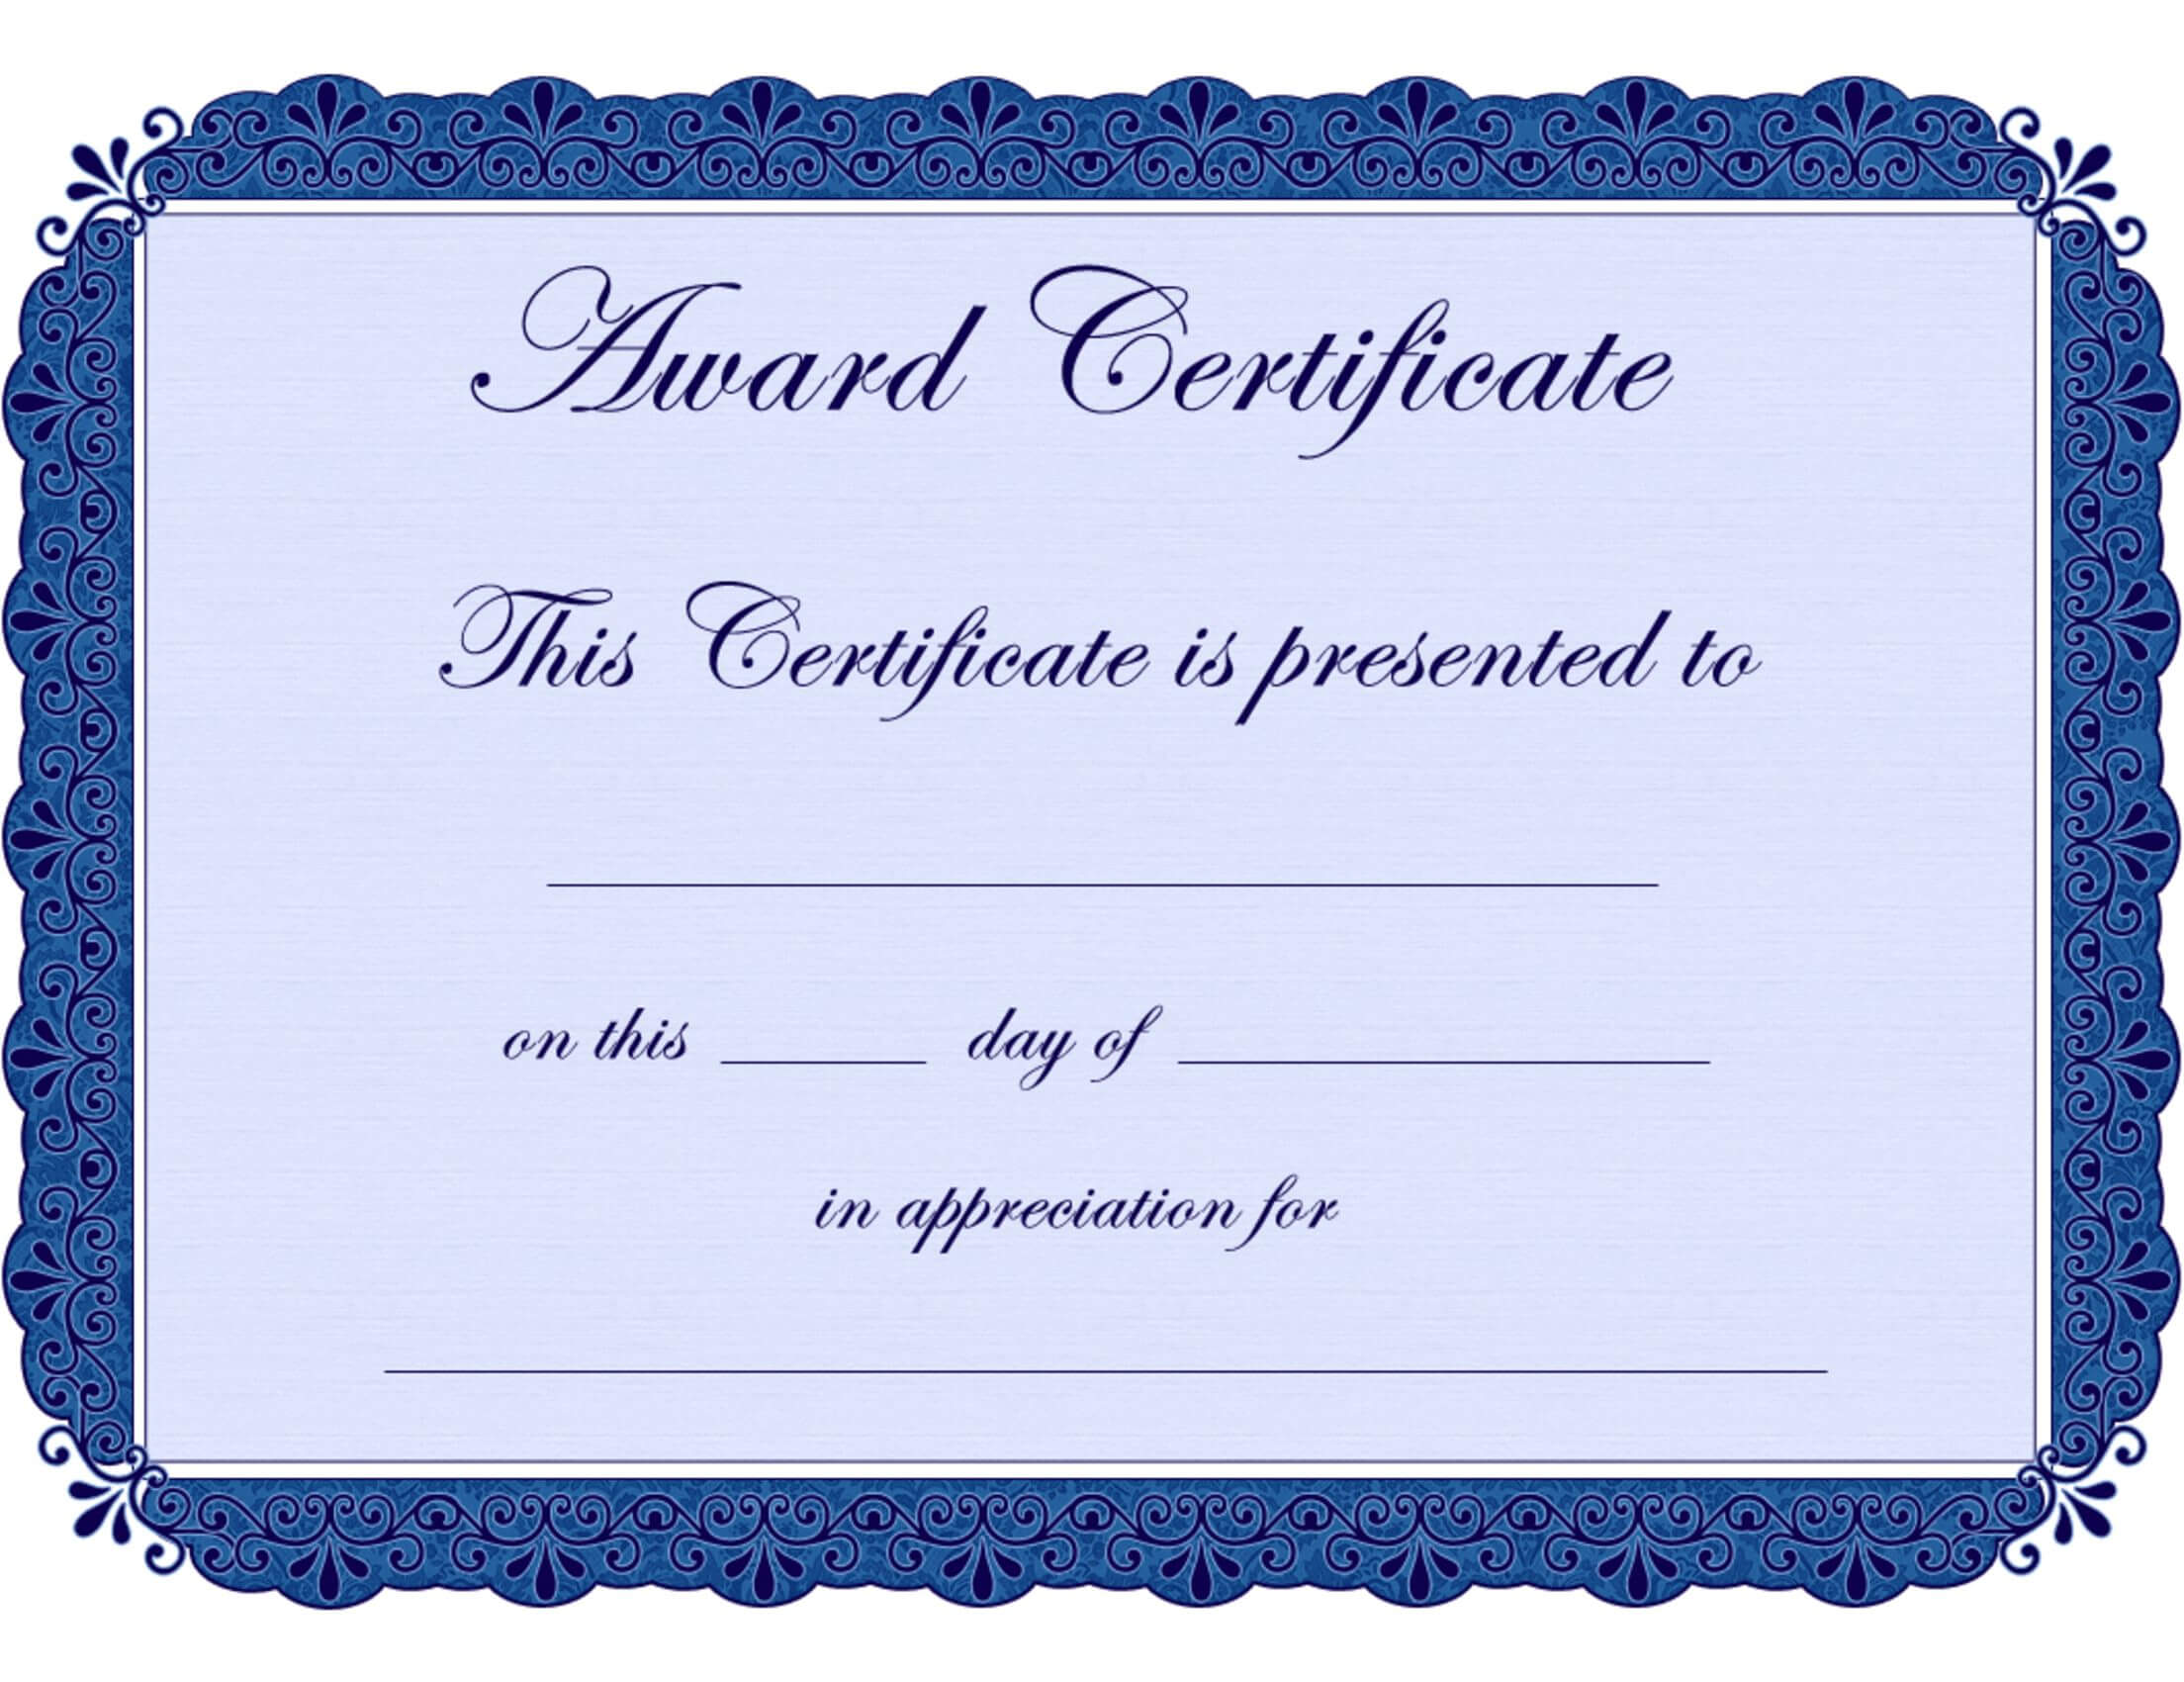 Free Printable Award Certificate Borders | Award In Free With Regard To Free Printable Certificate Of Achievement Template